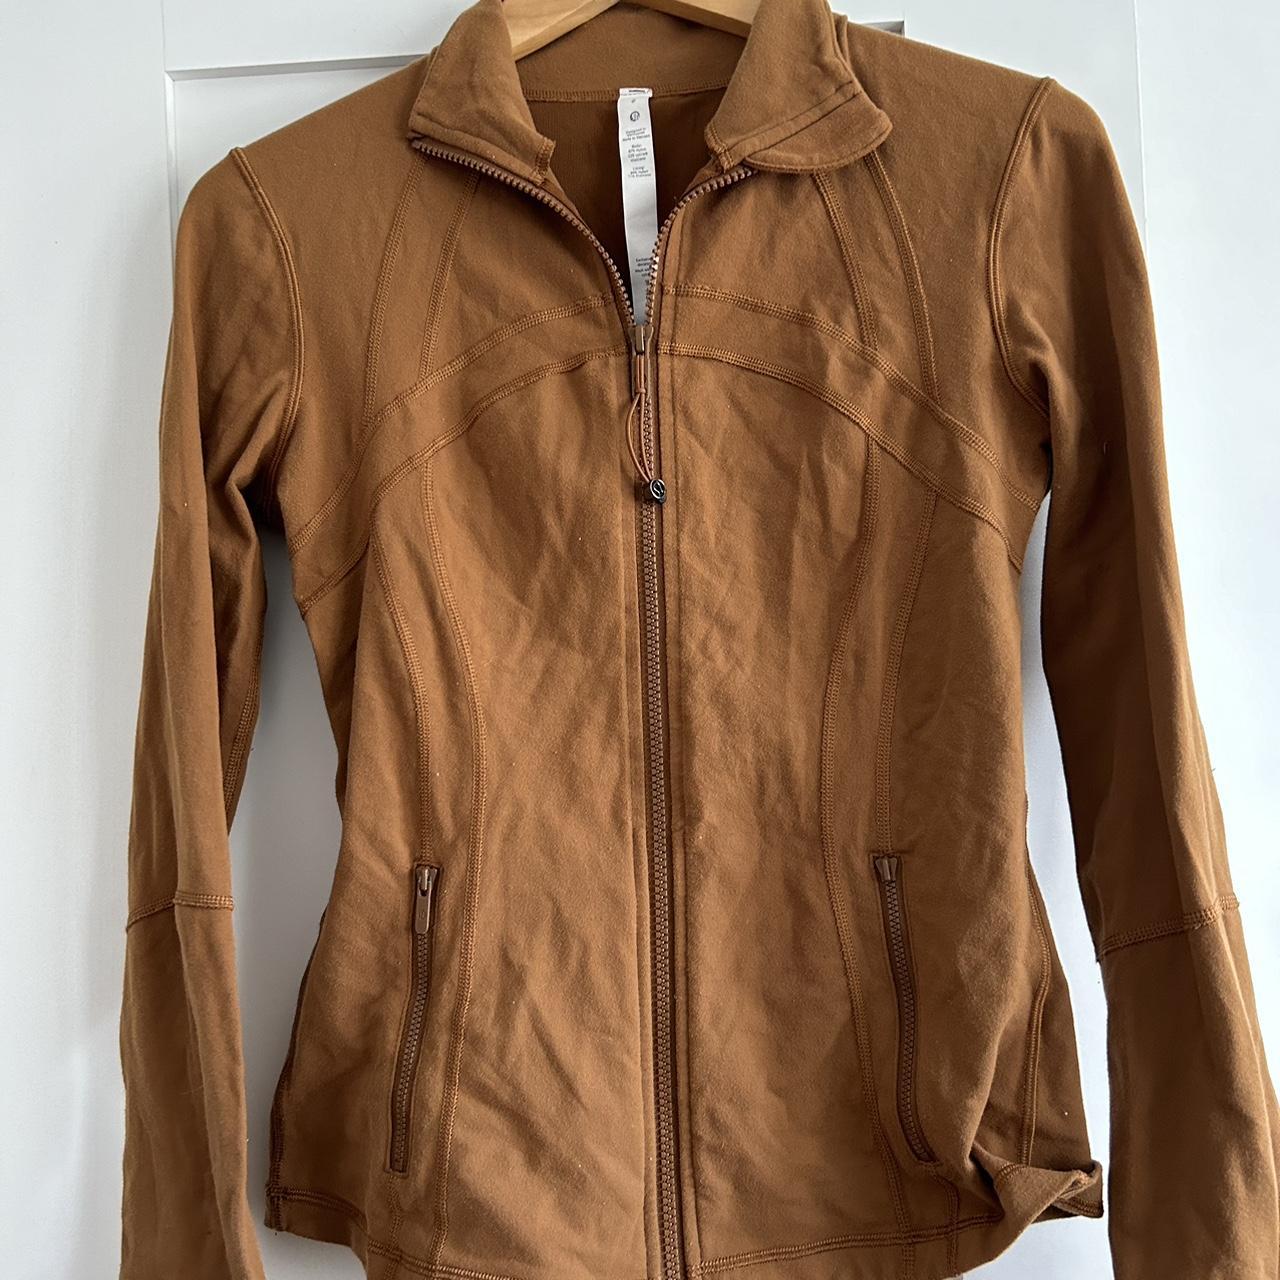 Lululemon Define Jacket in Copper brown. Pilling - Depop